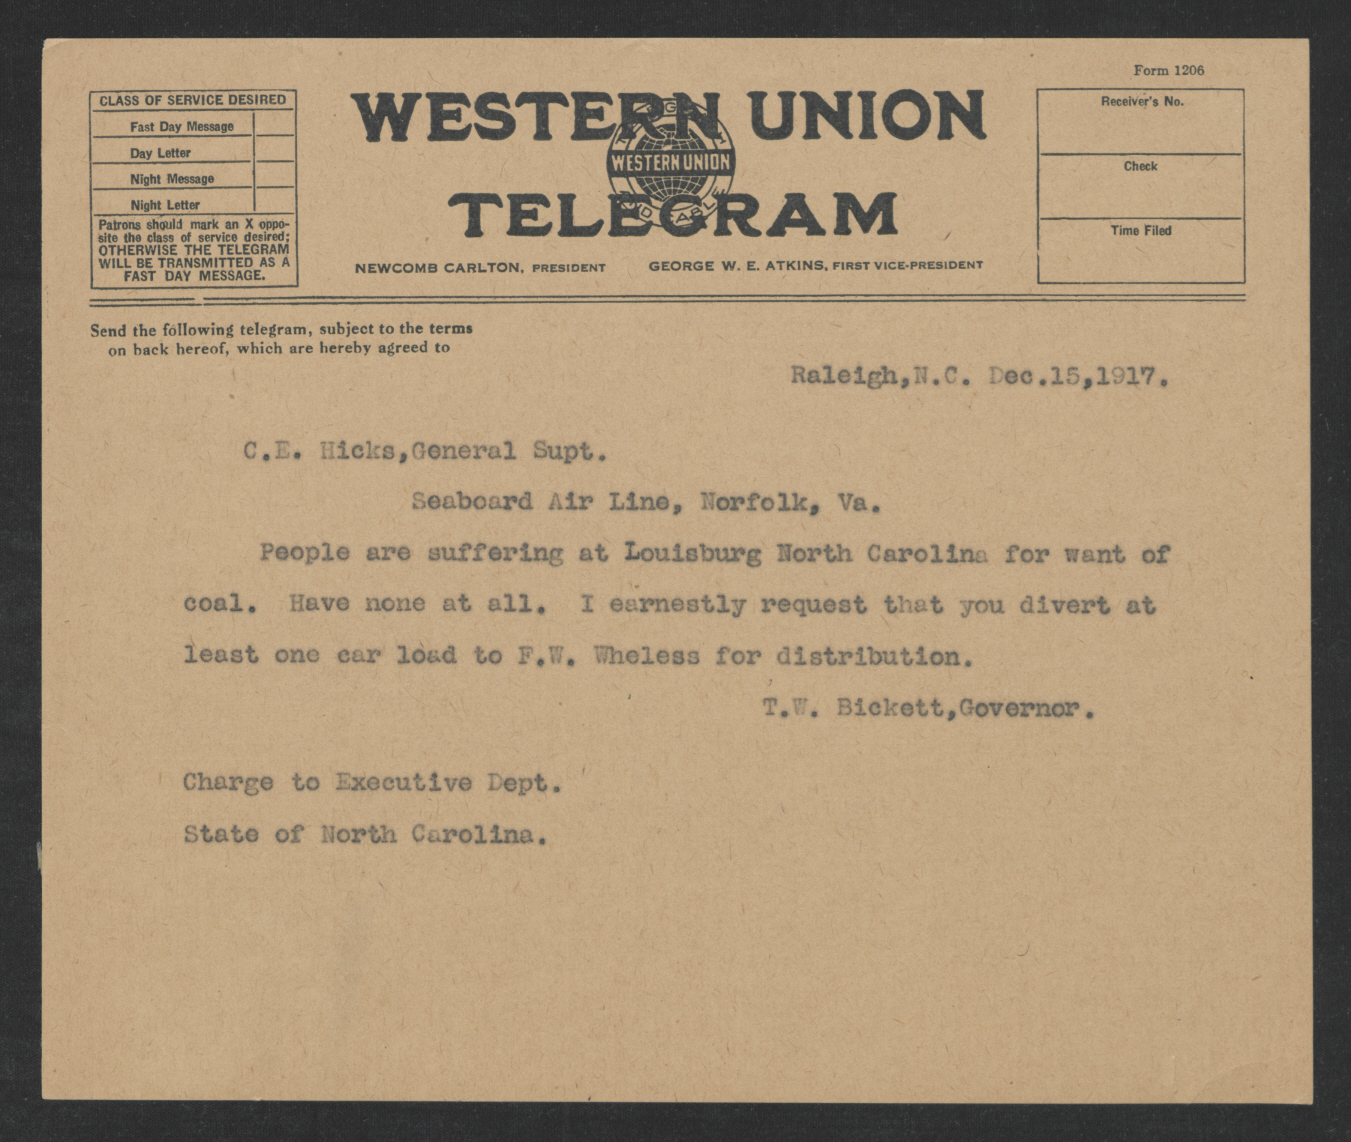 Telegram from Thomas W. Bickett to Charles E. Hix, December 15, 1917